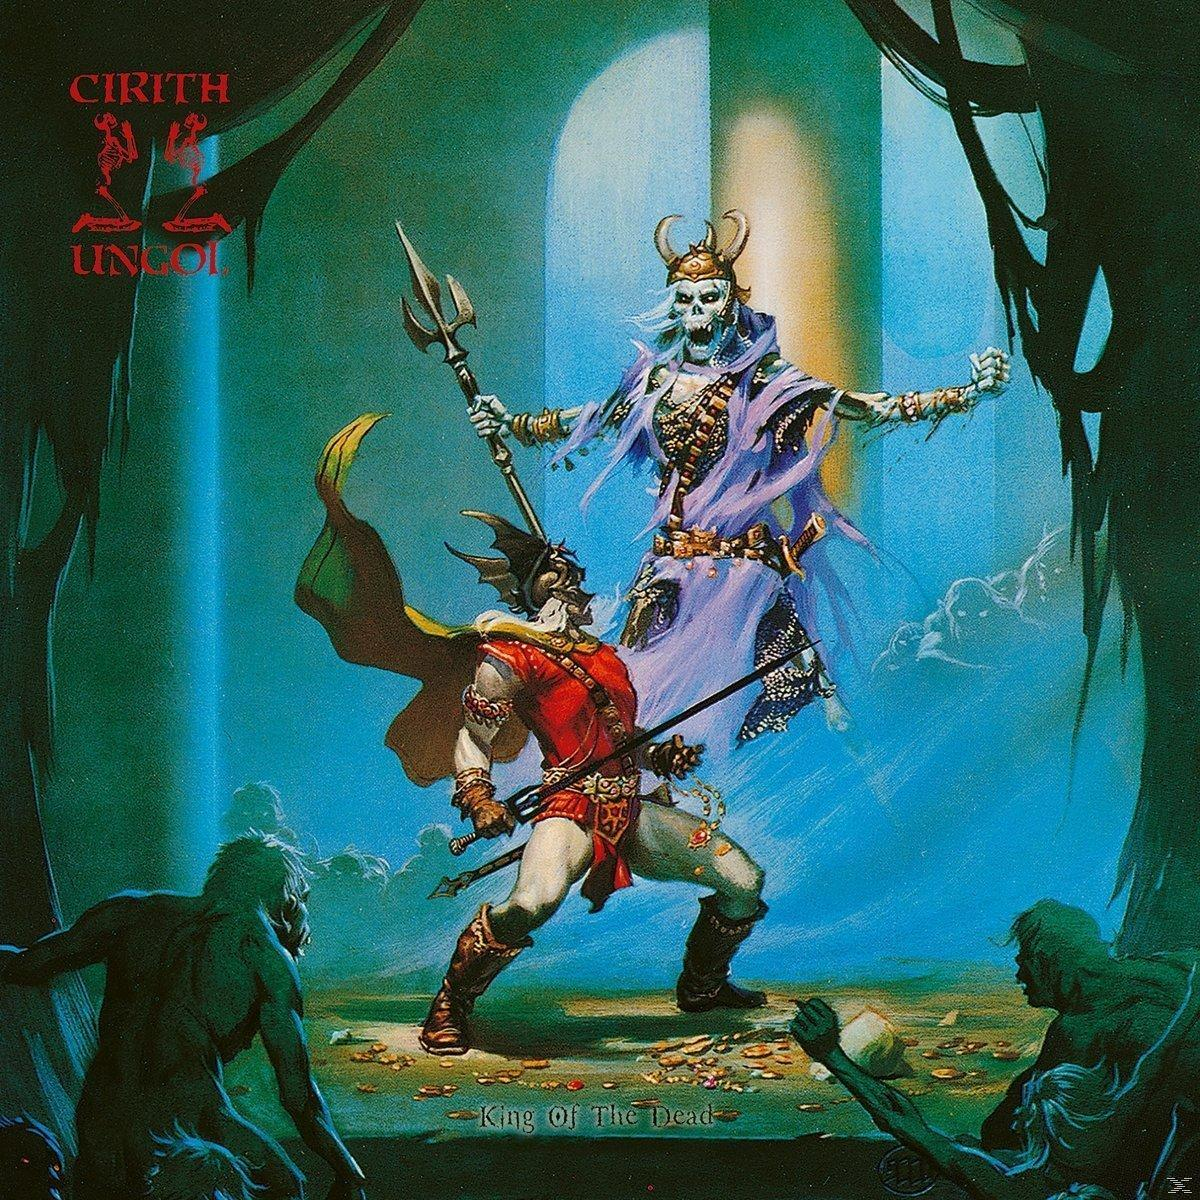 Cirith Ungol Ltd the Dead-180g Vinyl of Ed King Black - (Vinyl) 